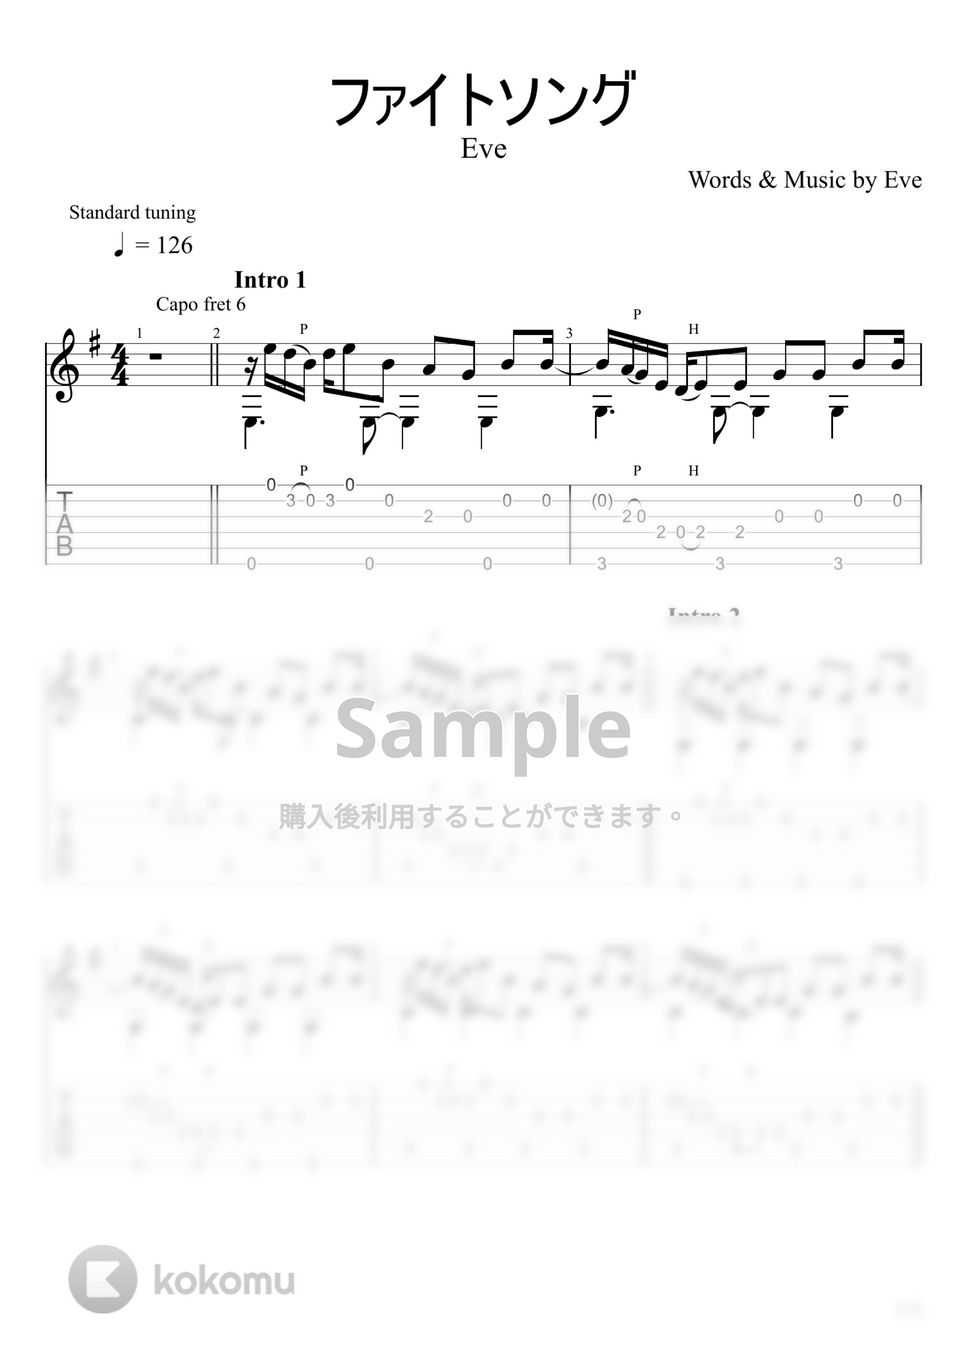 Eve - ファイトソング (ソロギター) by u3danchou